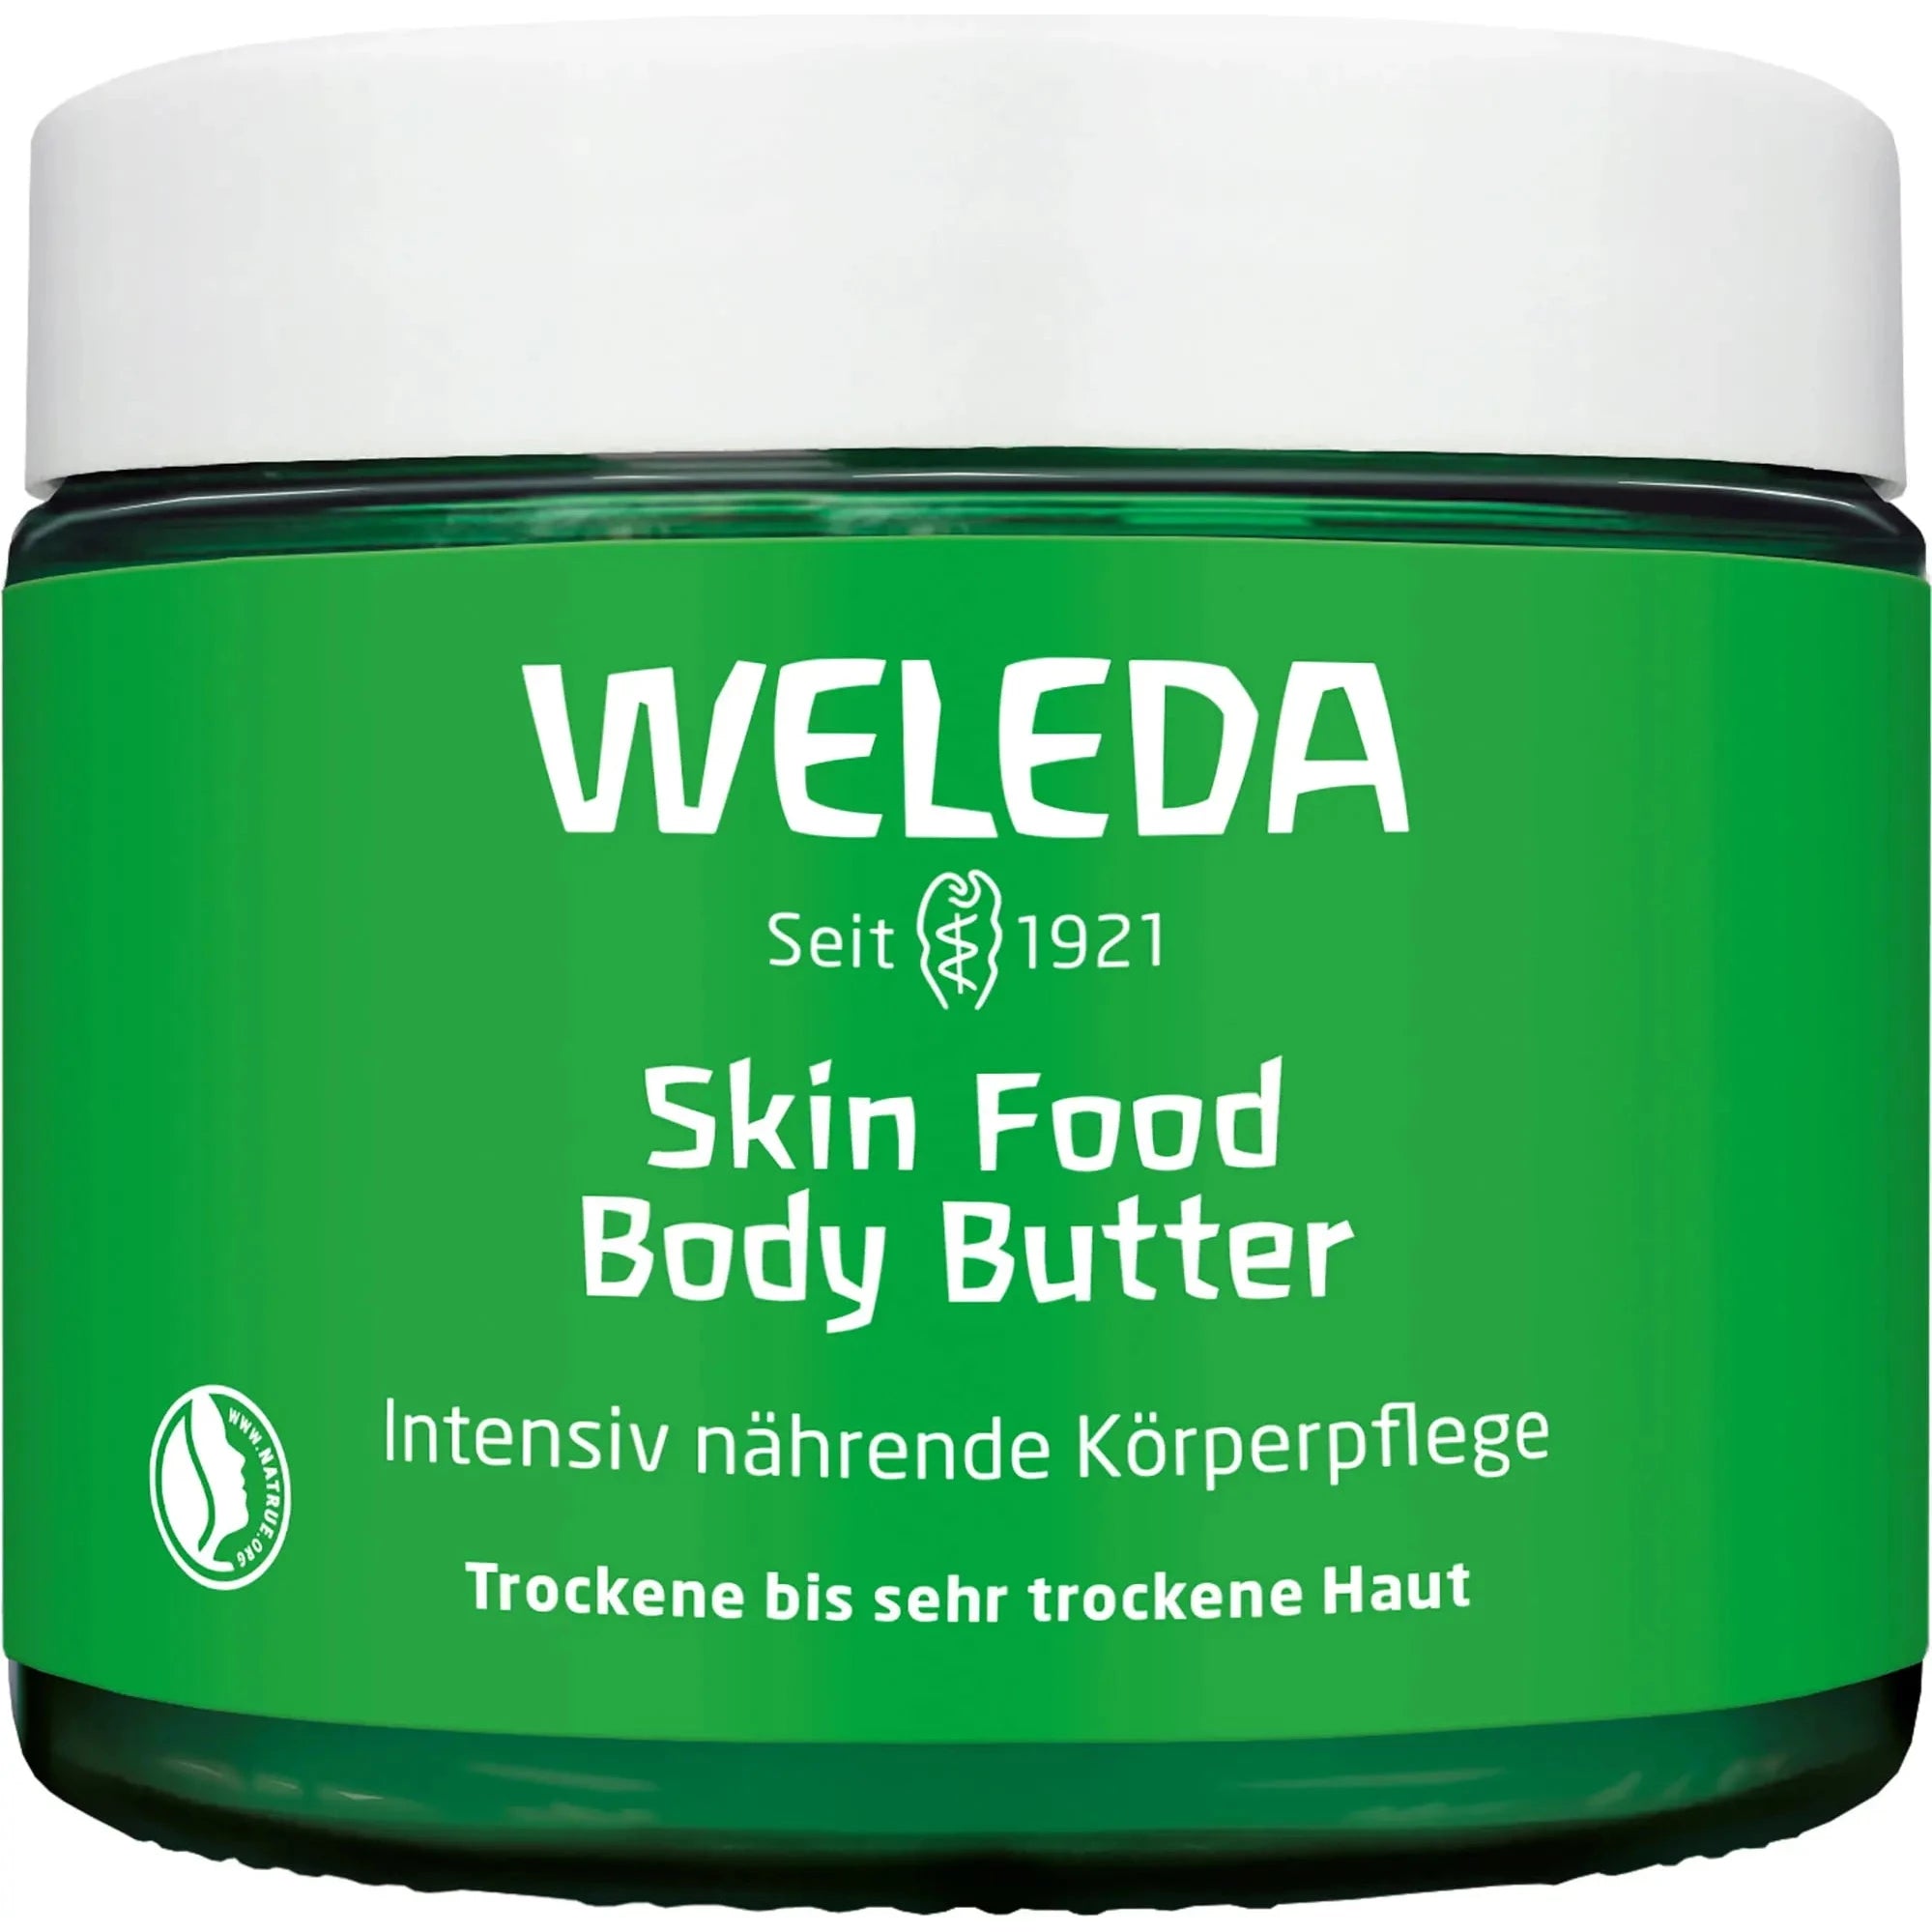 Skin Food Body Butter Weleda - 150ml